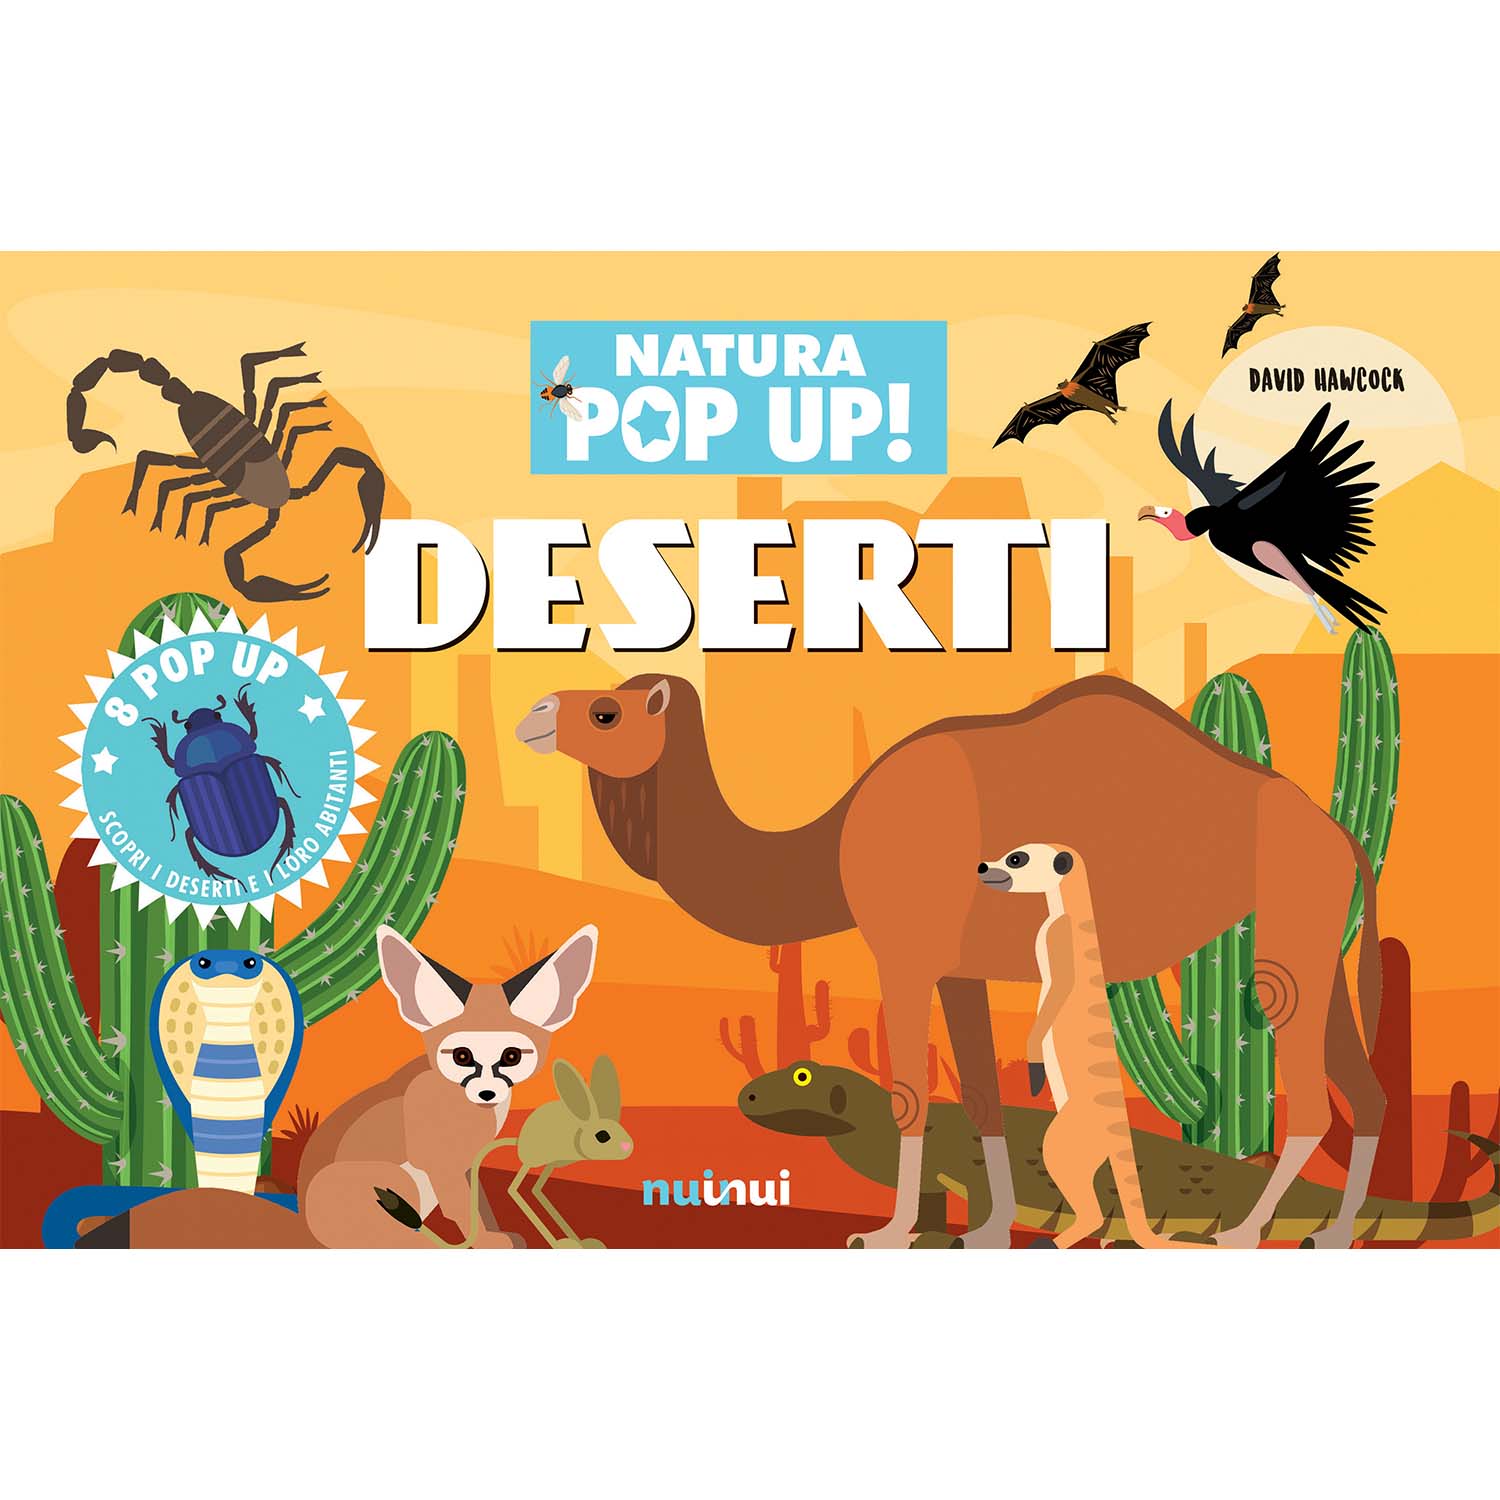 Natura pop up - Deserti